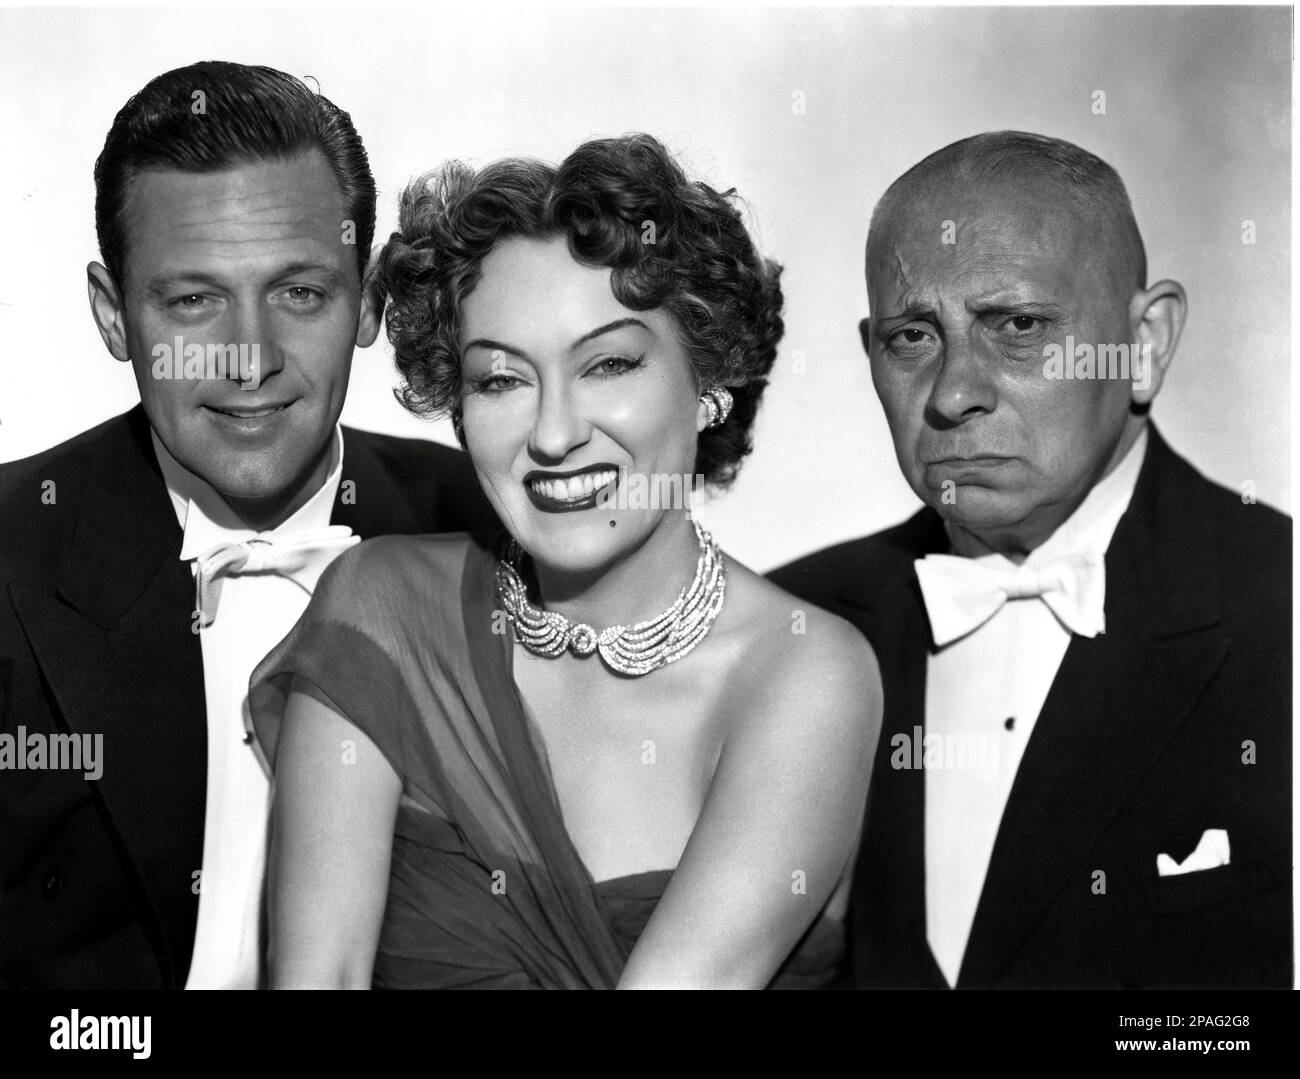 1951 : l'actrice Gloria SWANSON ( Chicago 1898 - New York 1983 ) comme Norma Desmond dans SUNSET BOULEVARD ( Viale del Tramonto ) par Billy Wilder, avec WILLIAM HOLDEN et ERIC VON STROHEIM , costume par Edith HEAD , Paramount pubblicity encore - FILM - CINÉMA - attice cinematografica - VAMP - DIVA - DIVINA - DIVIN - Hollywood sur Hollywood - assassina - tueur - imbécile - fou - pazza - pazzo - matto - malato di mente - mole - néo - sourire - sorriso - tie noeud - papillon - colletto - collier - bijoux - bijoux - gioiello - gioielli - collana - collier --- ARCHIVIO GBB Banque D'Images